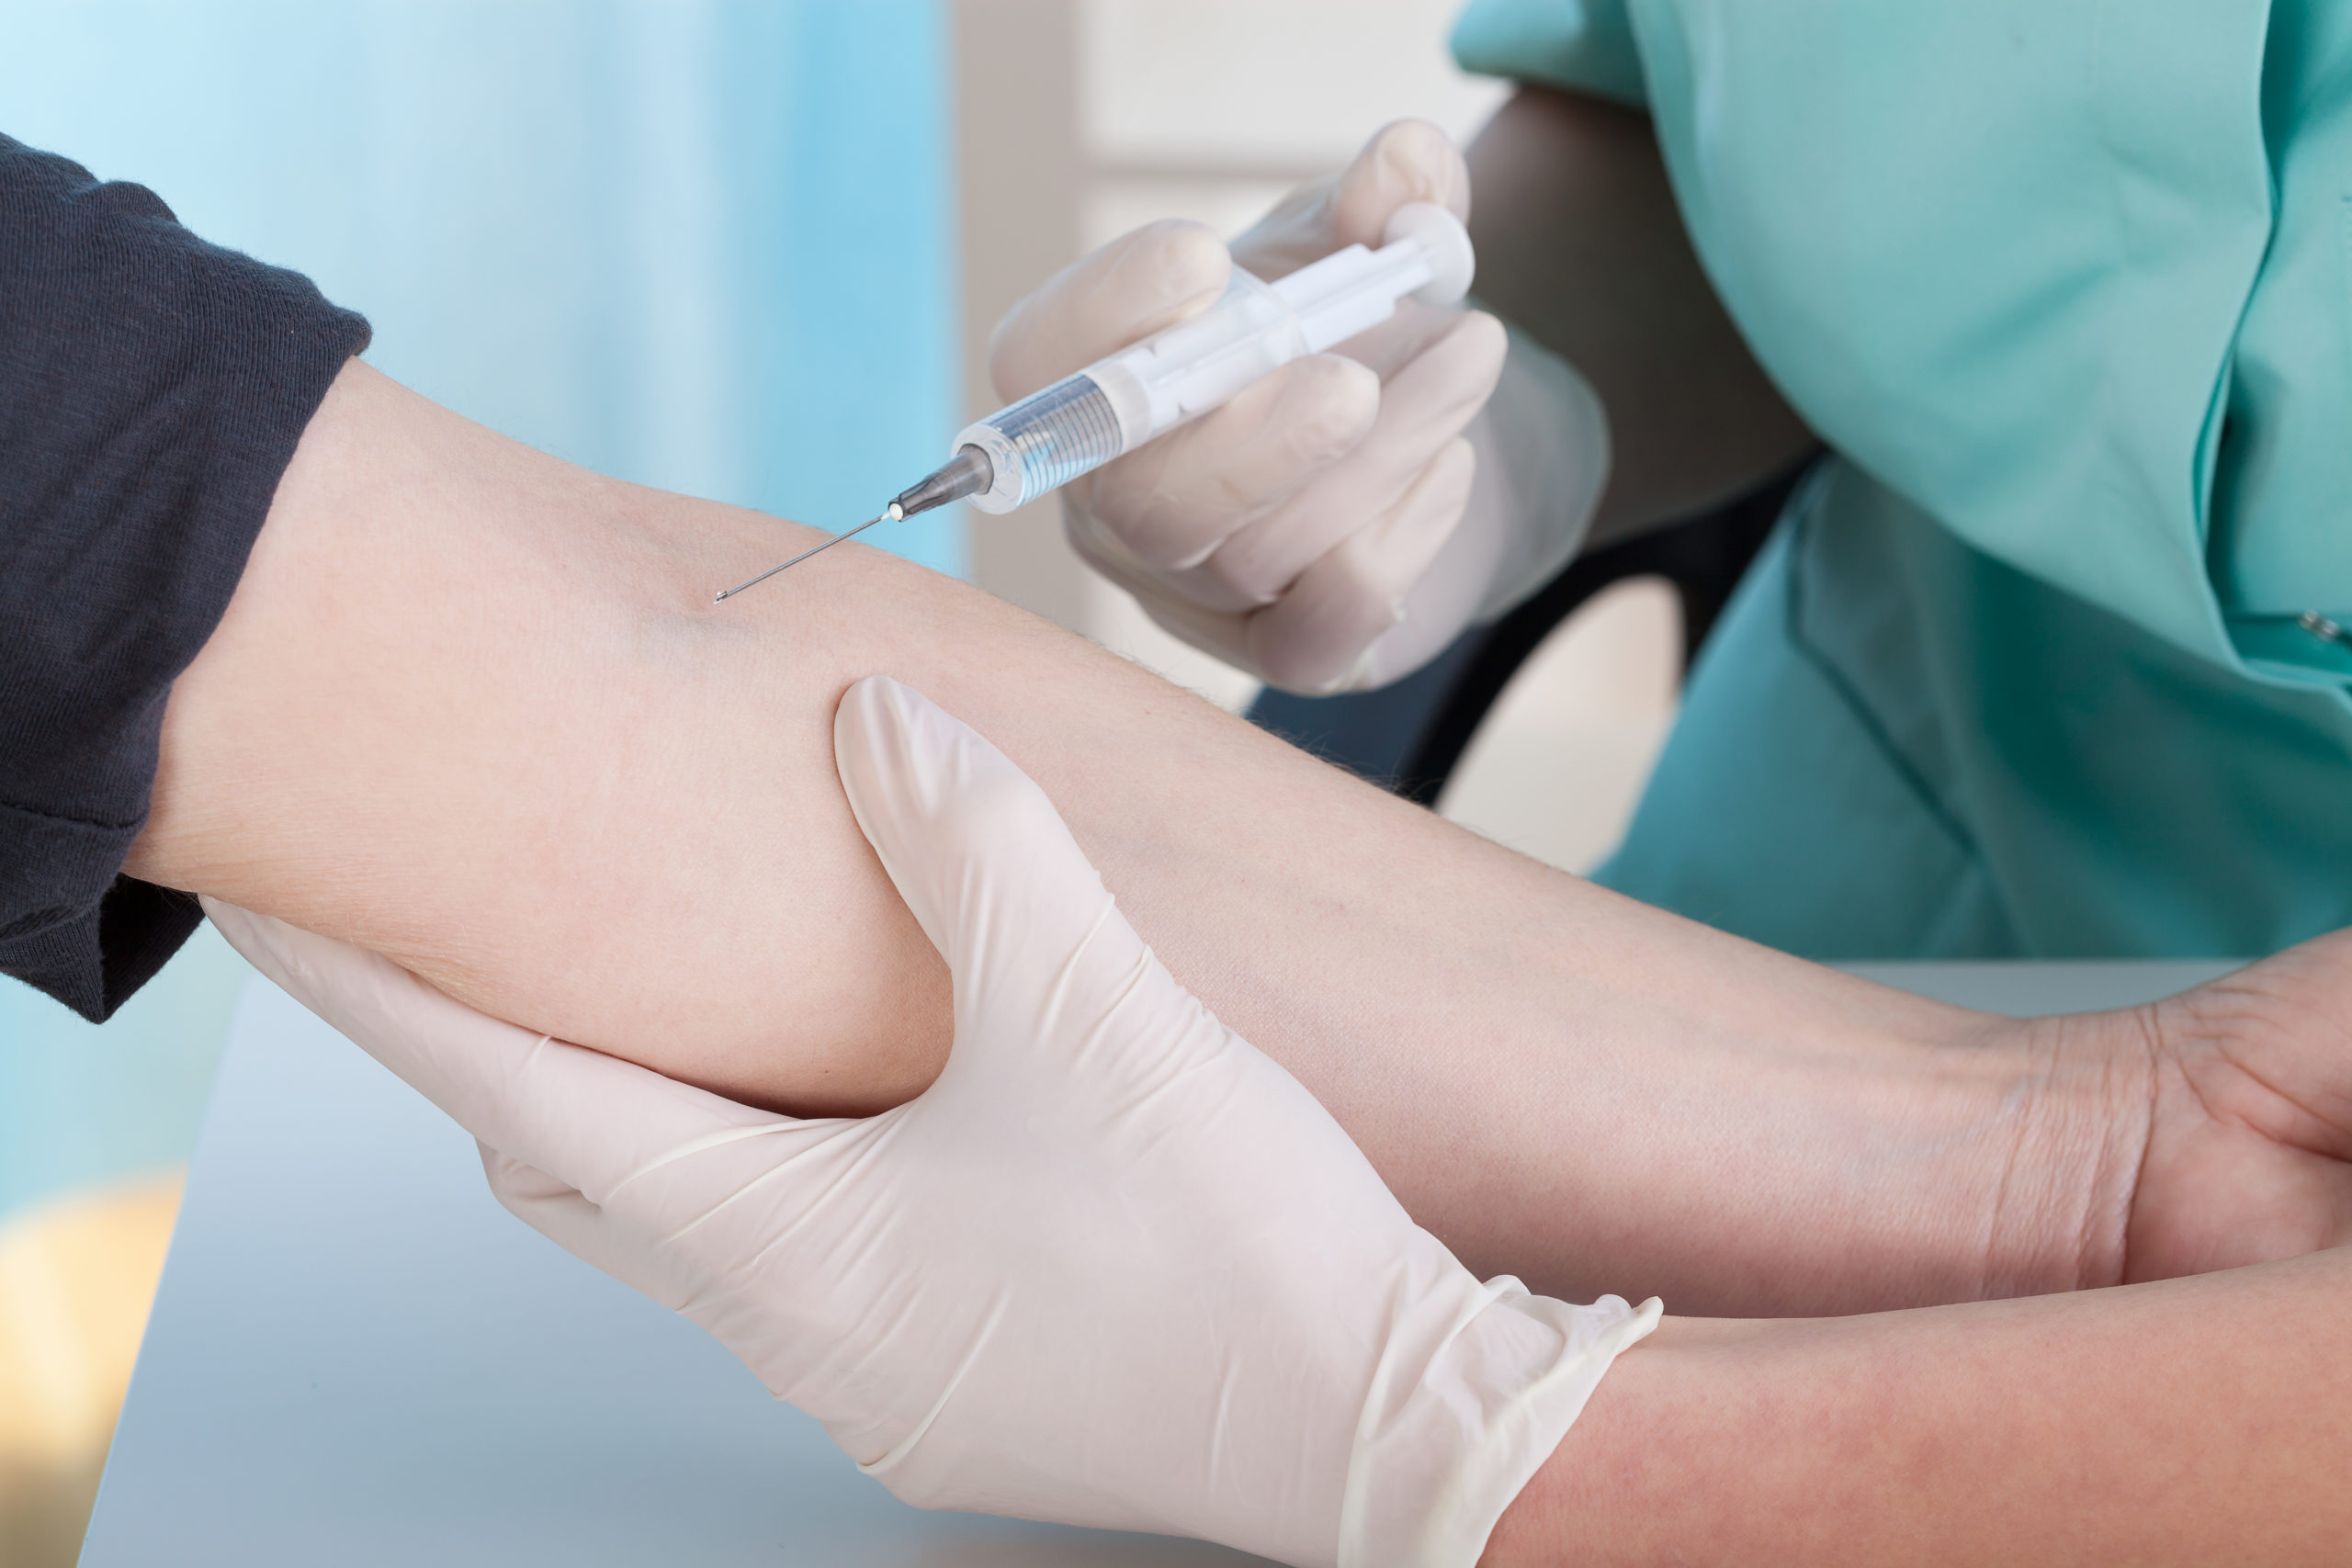 Vaccination Injury